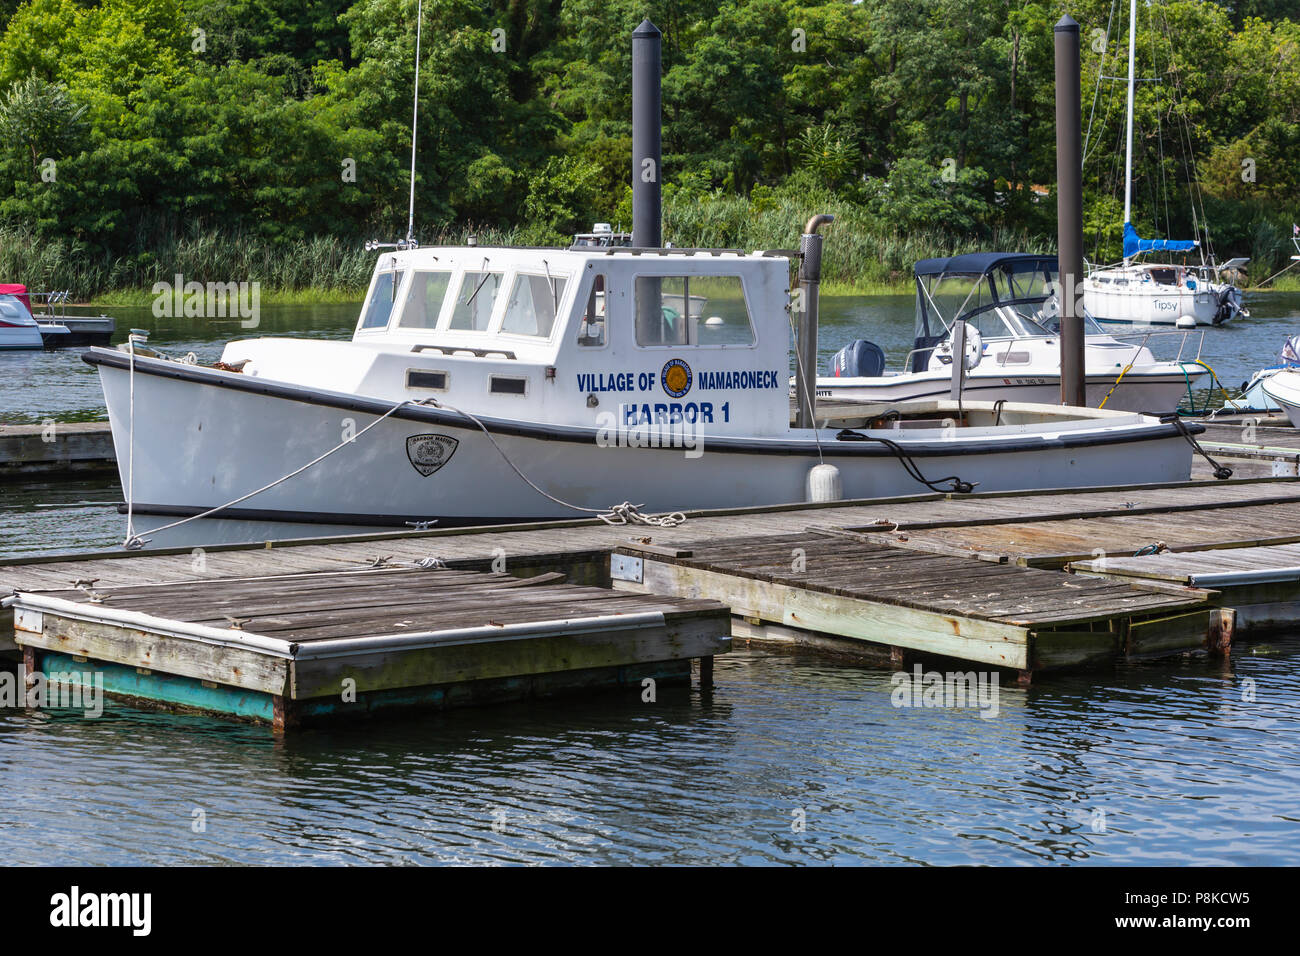 A Mamaroneck Harbor Master's boat docked in the West Basin of Mamaroneck Harbor in Harbor Island Park, Mamaroneck, New York. Stock Photo